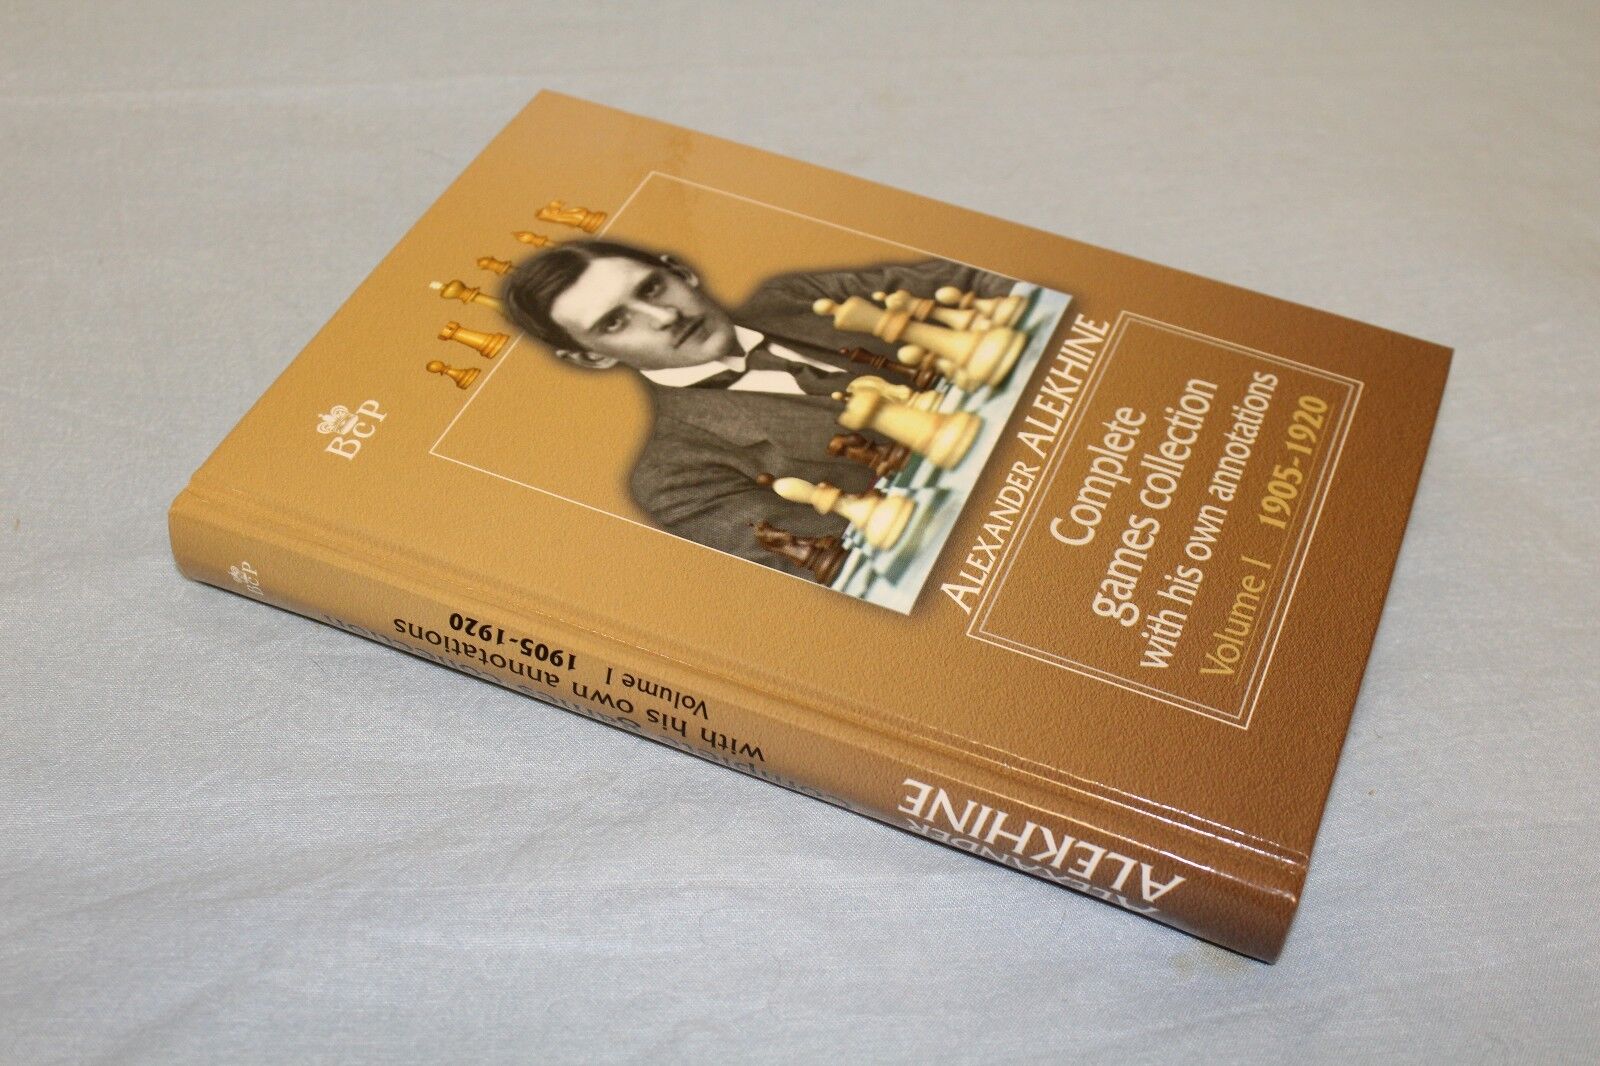 Alexander Alekhine - Complete Games Collection - Vol. 1 - 1905-1920